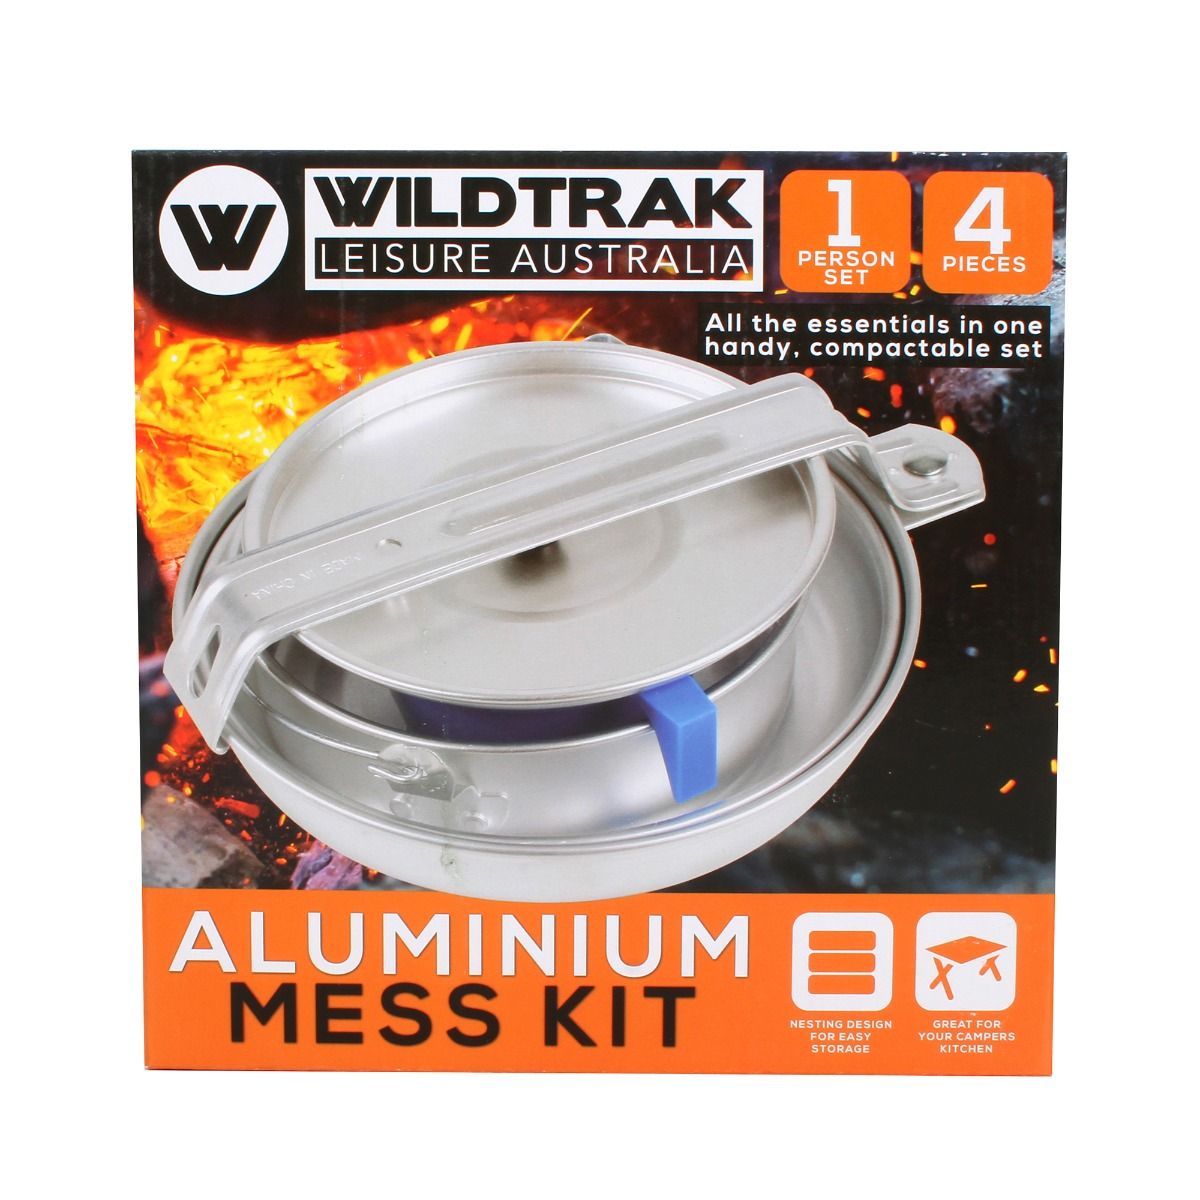 One person aluminium mess kit